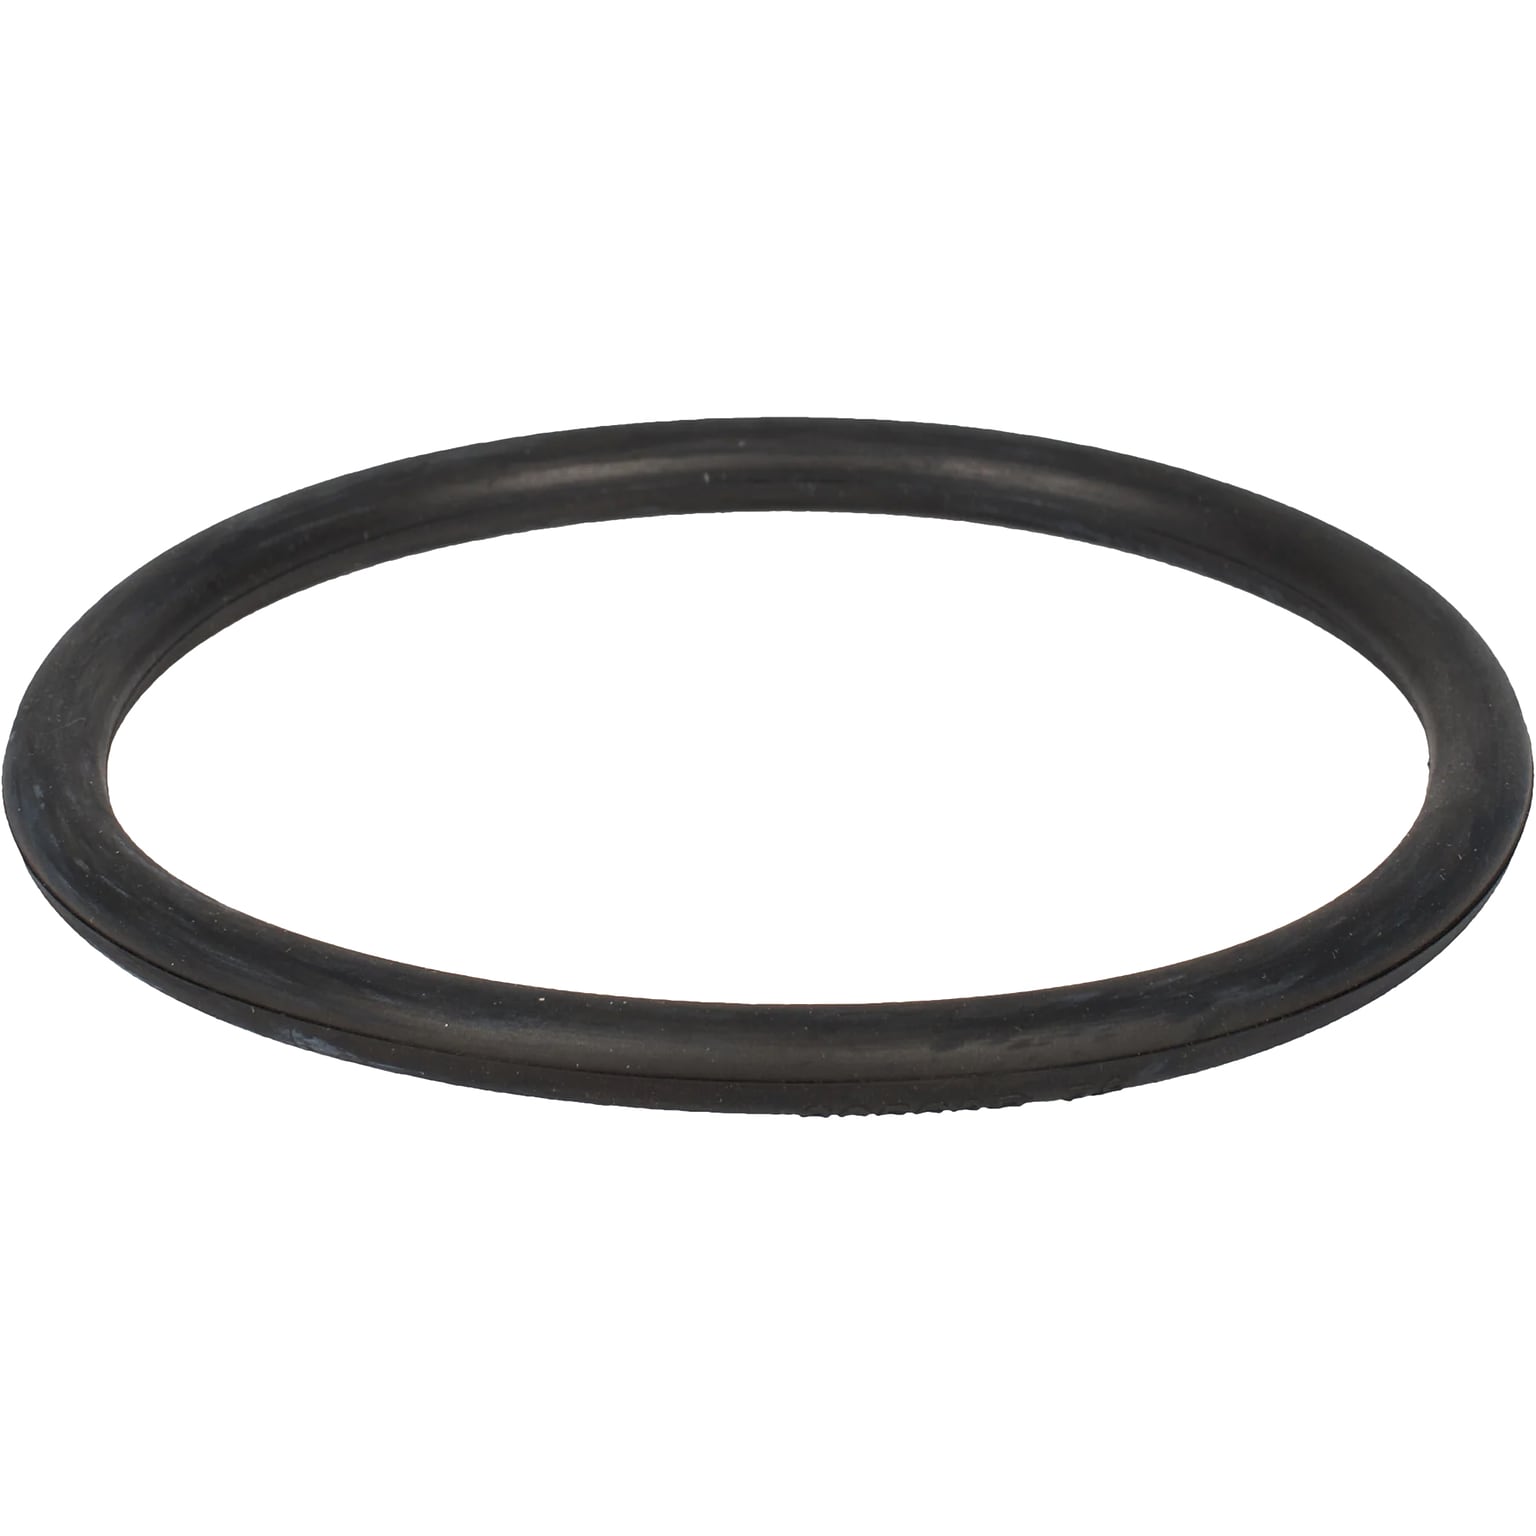 Sanitaire RD Vacuum Belt, Black, 2/Pack (66100)